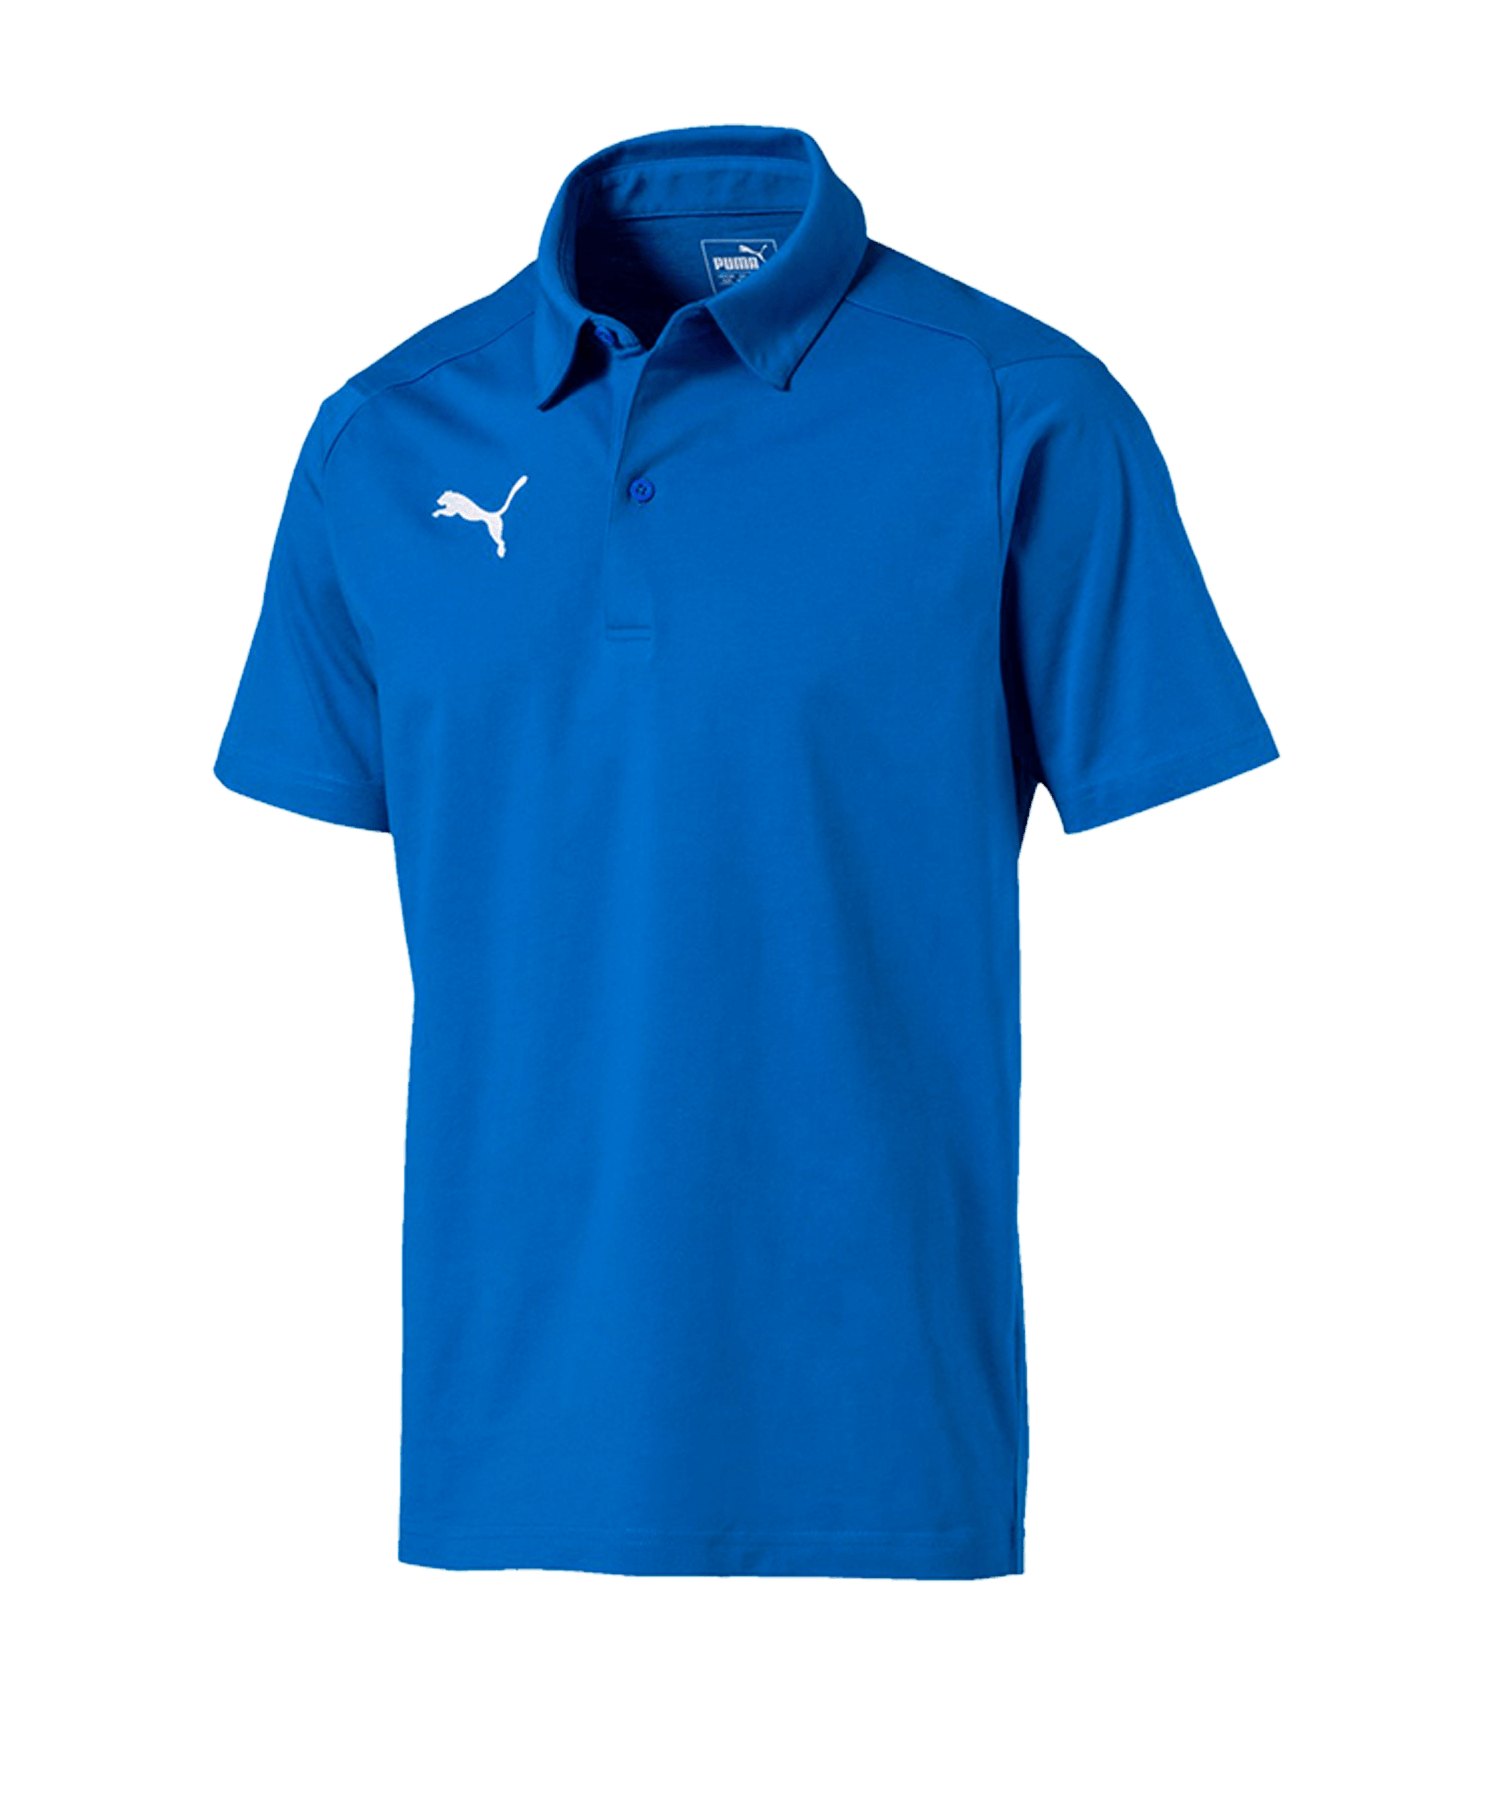 PUMA LIGA Casuals Poloshirt Blau F02 - blau